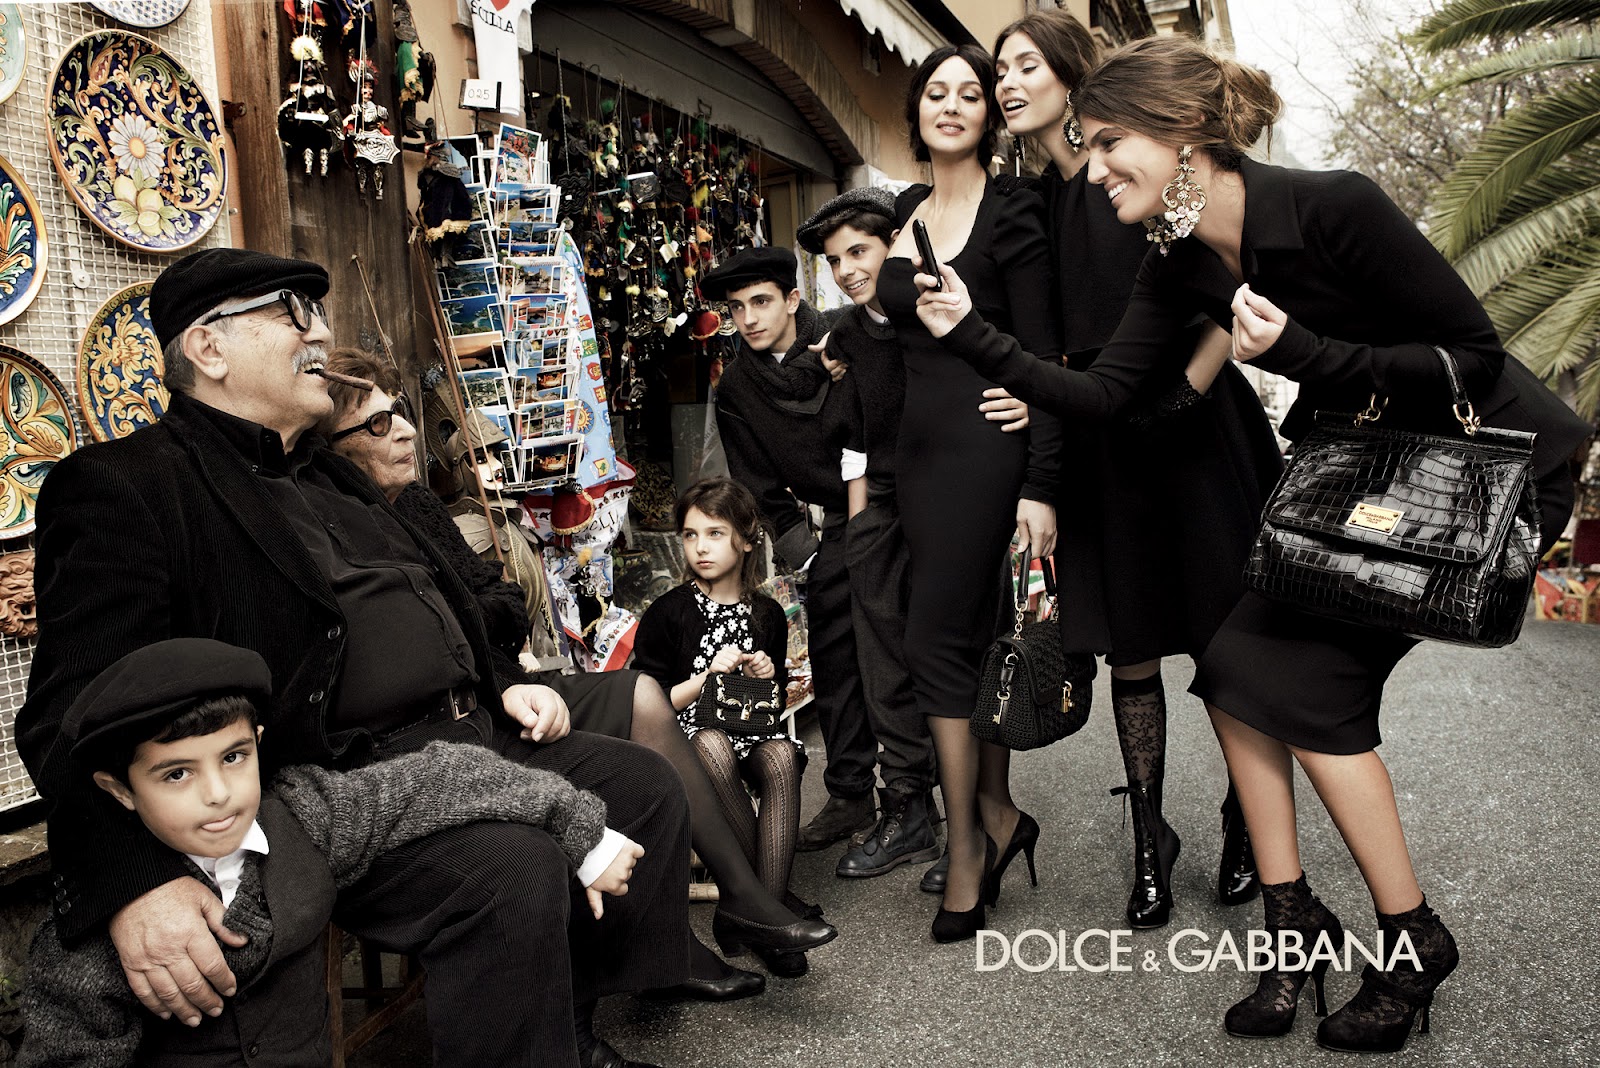 So Last-Year: Dolce & Gabbana jewellery | Last-Year Girl: So Last-Year